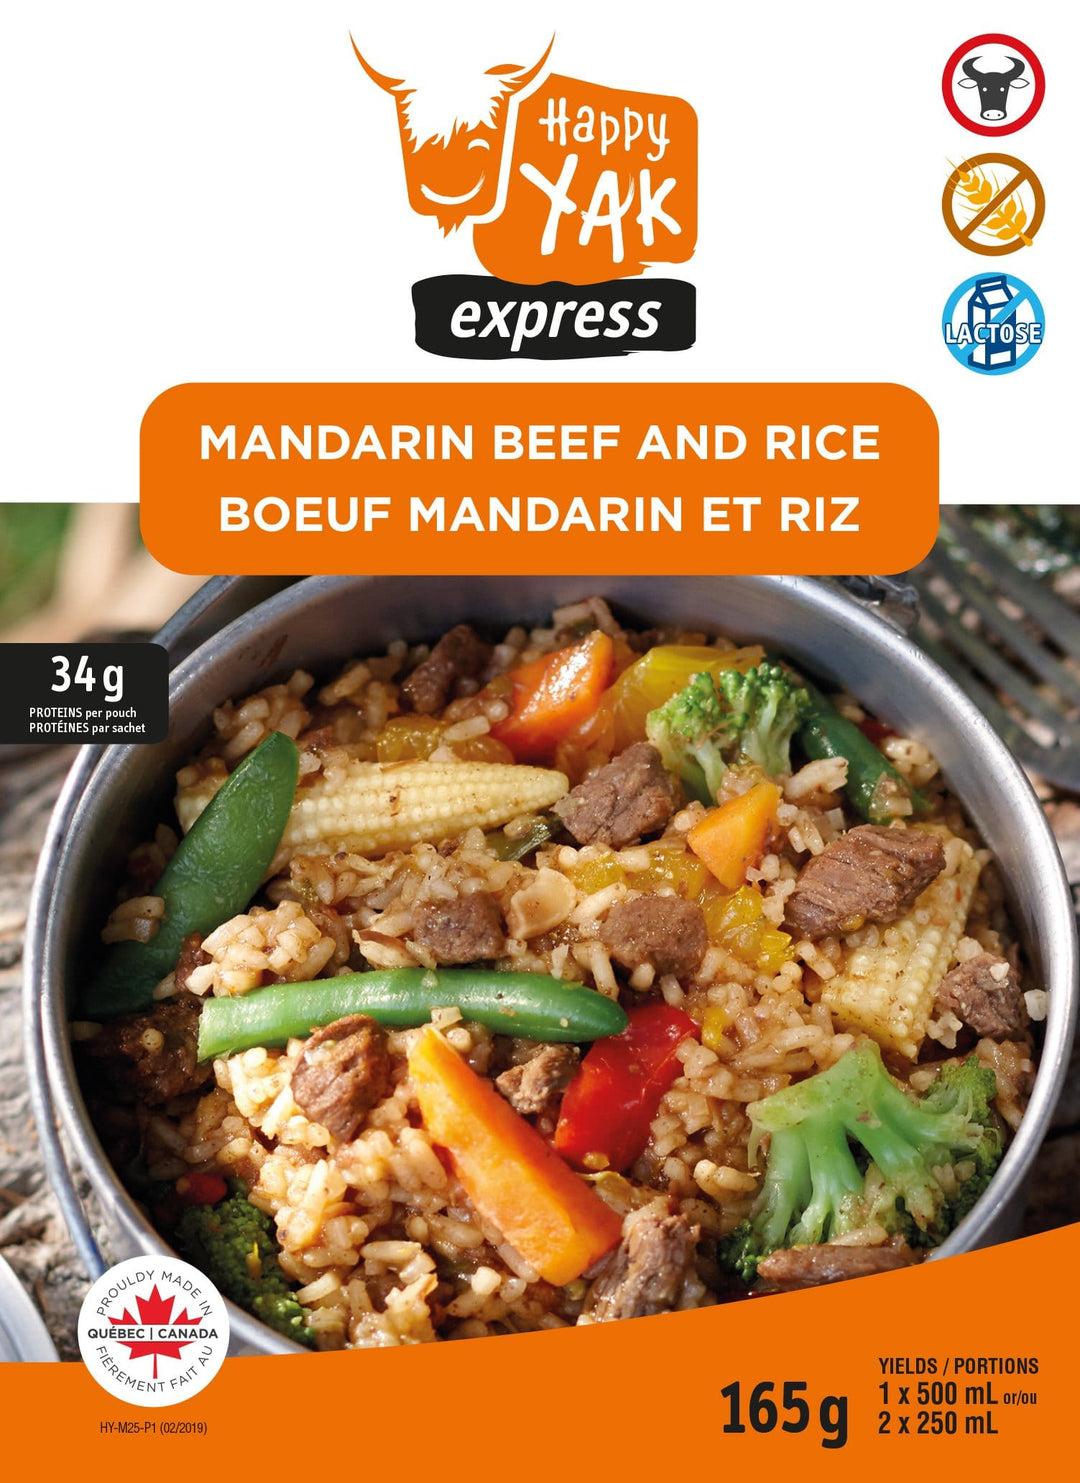 Happy Yak Mandarin Beef and Rice - 1 Portion